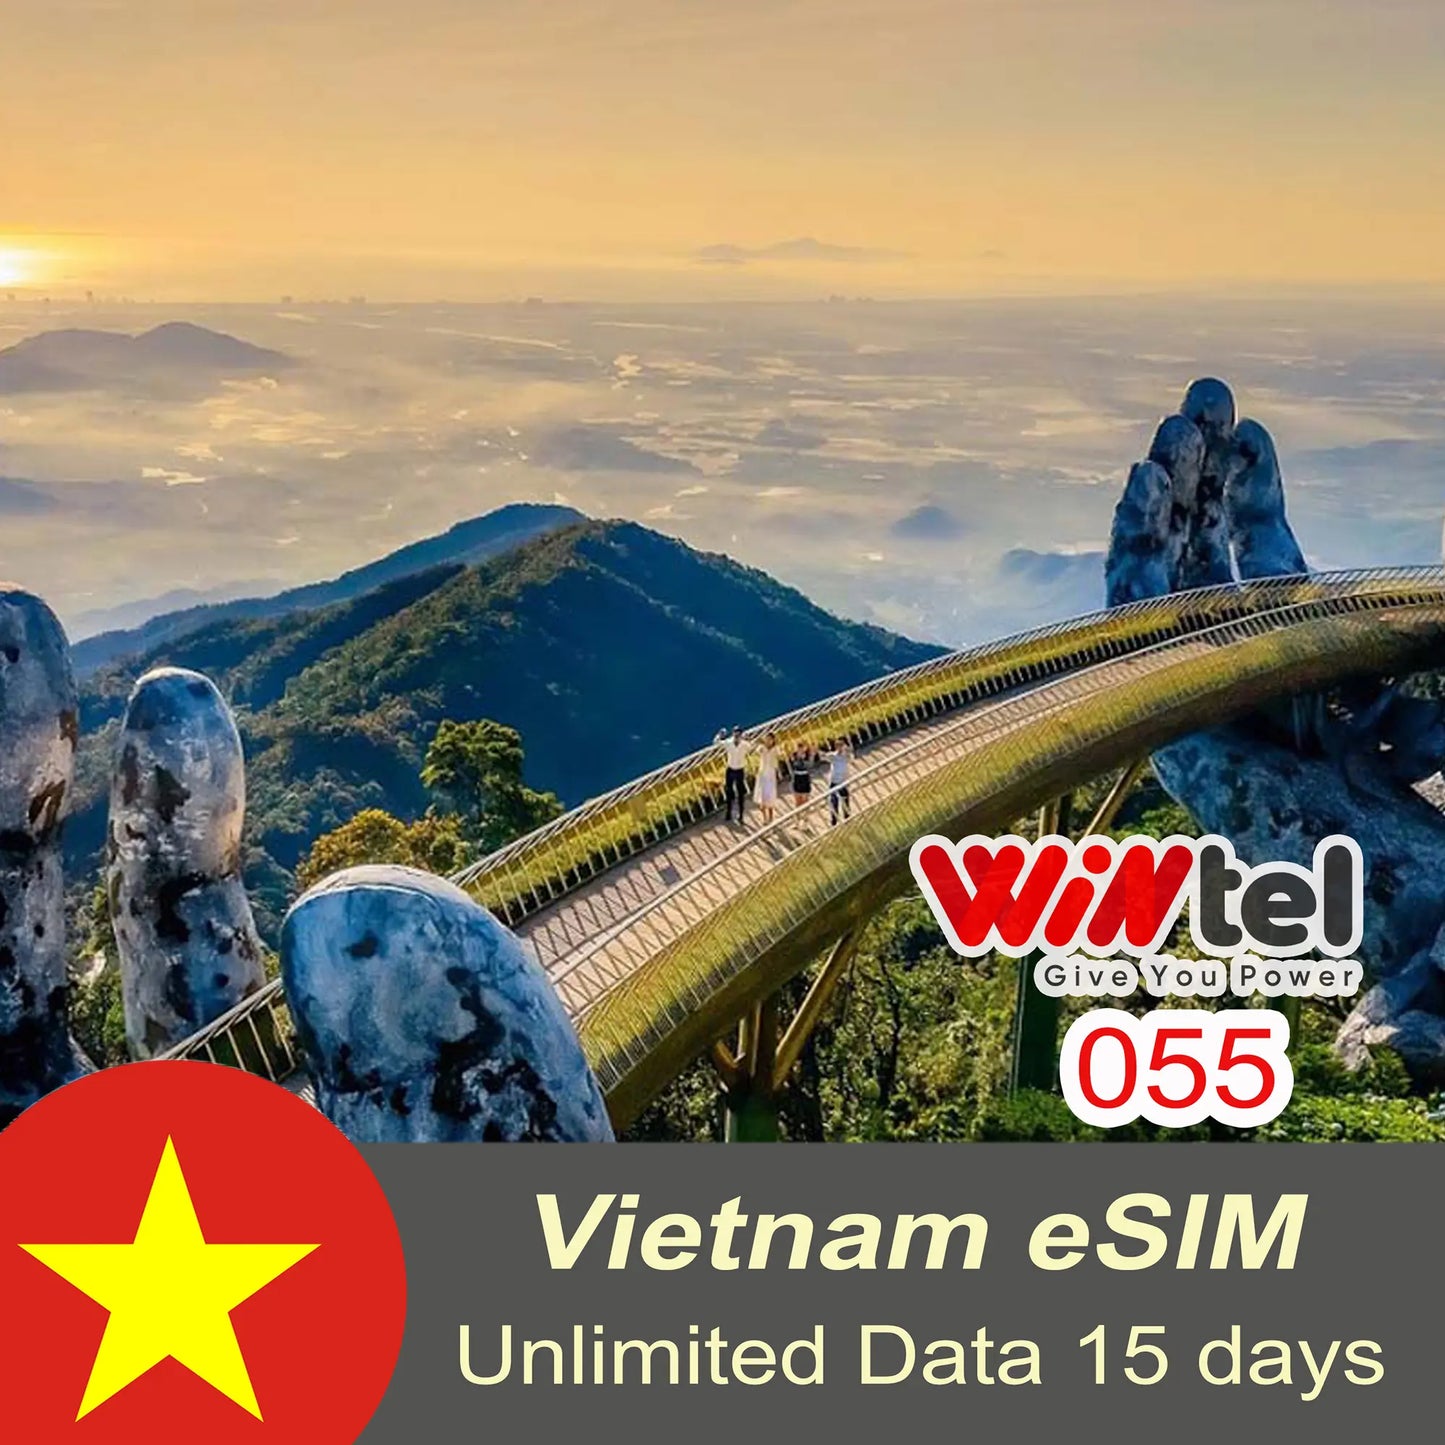 Vietnam eSIM Unlimited Data for 15 days